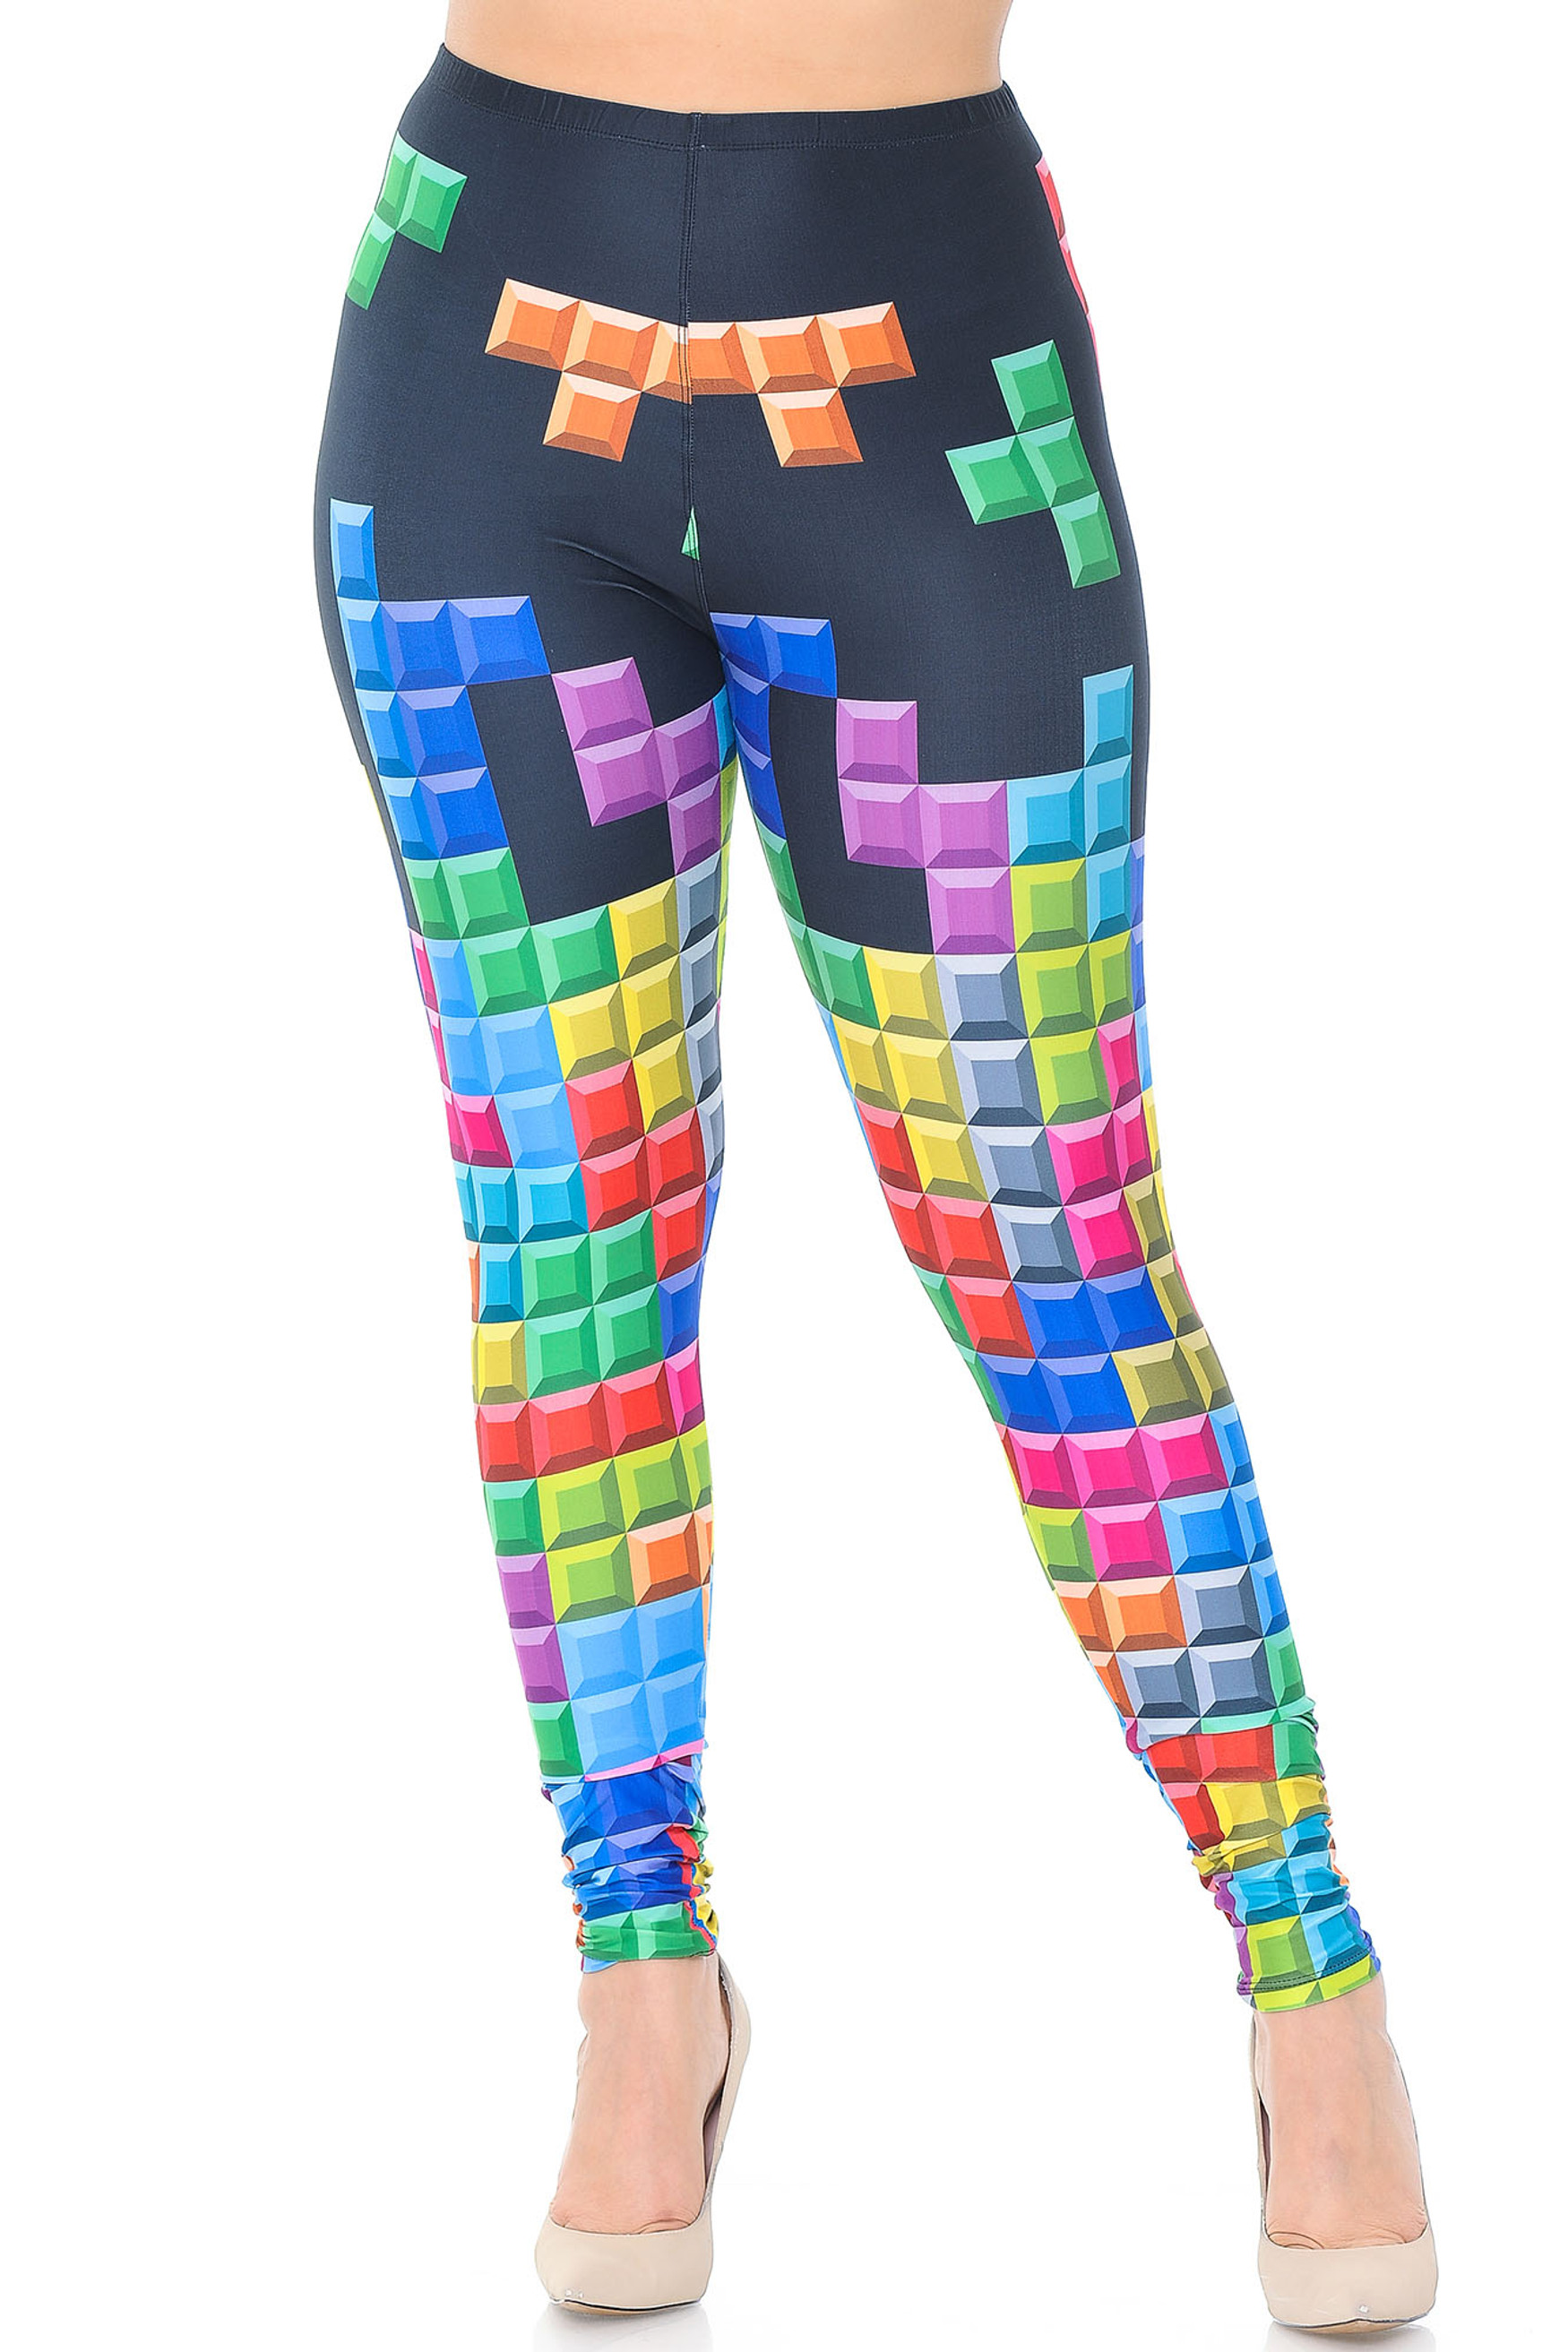 Creamy Soft Tetris Extra Plus Size Leggings - 3X-5X